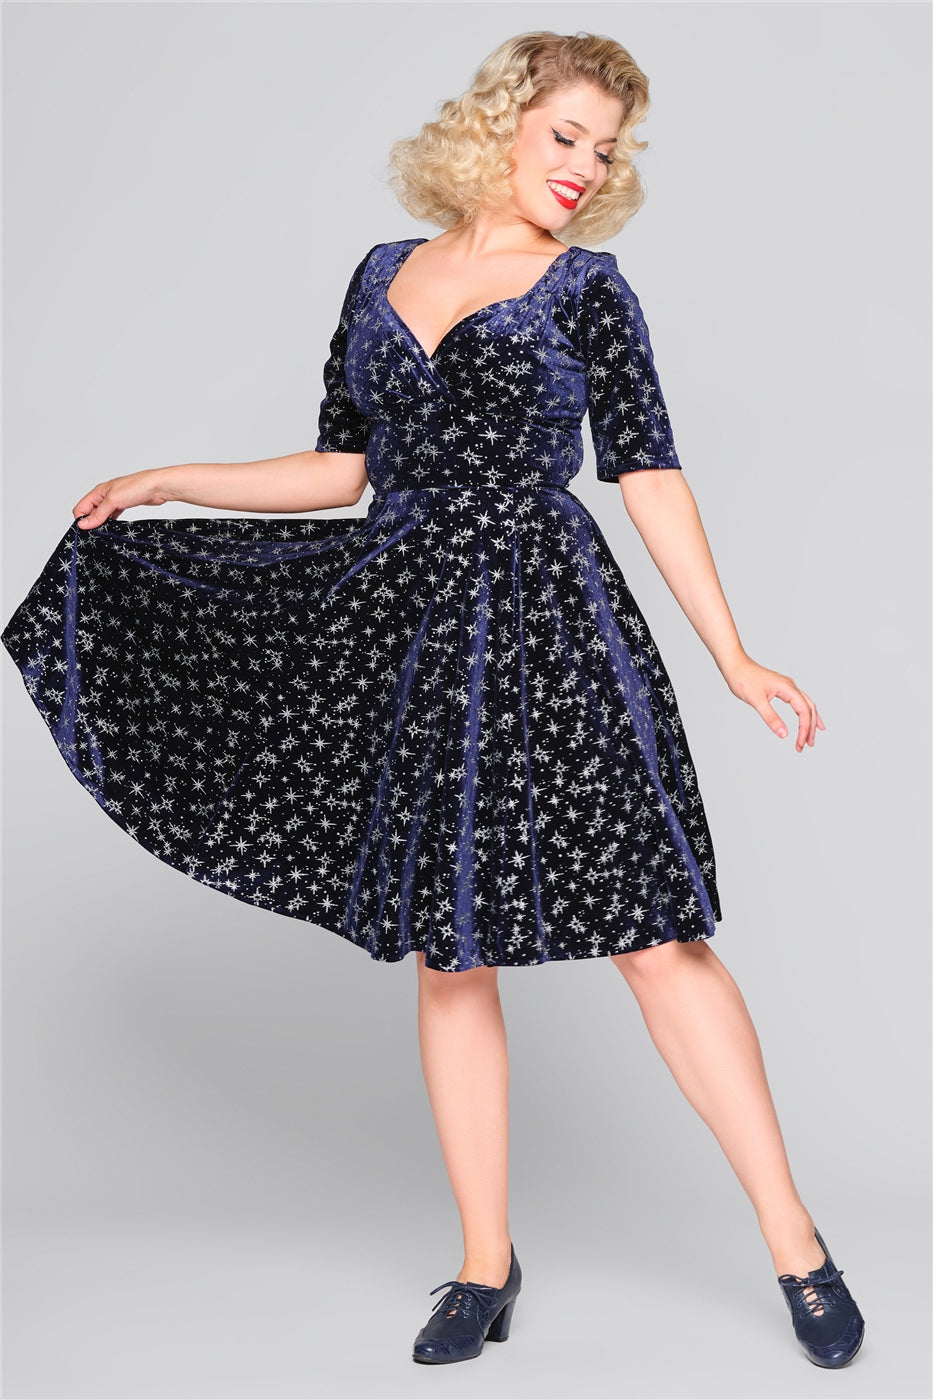 Trixie Velvet Sparkle Doll Dress by Collectif